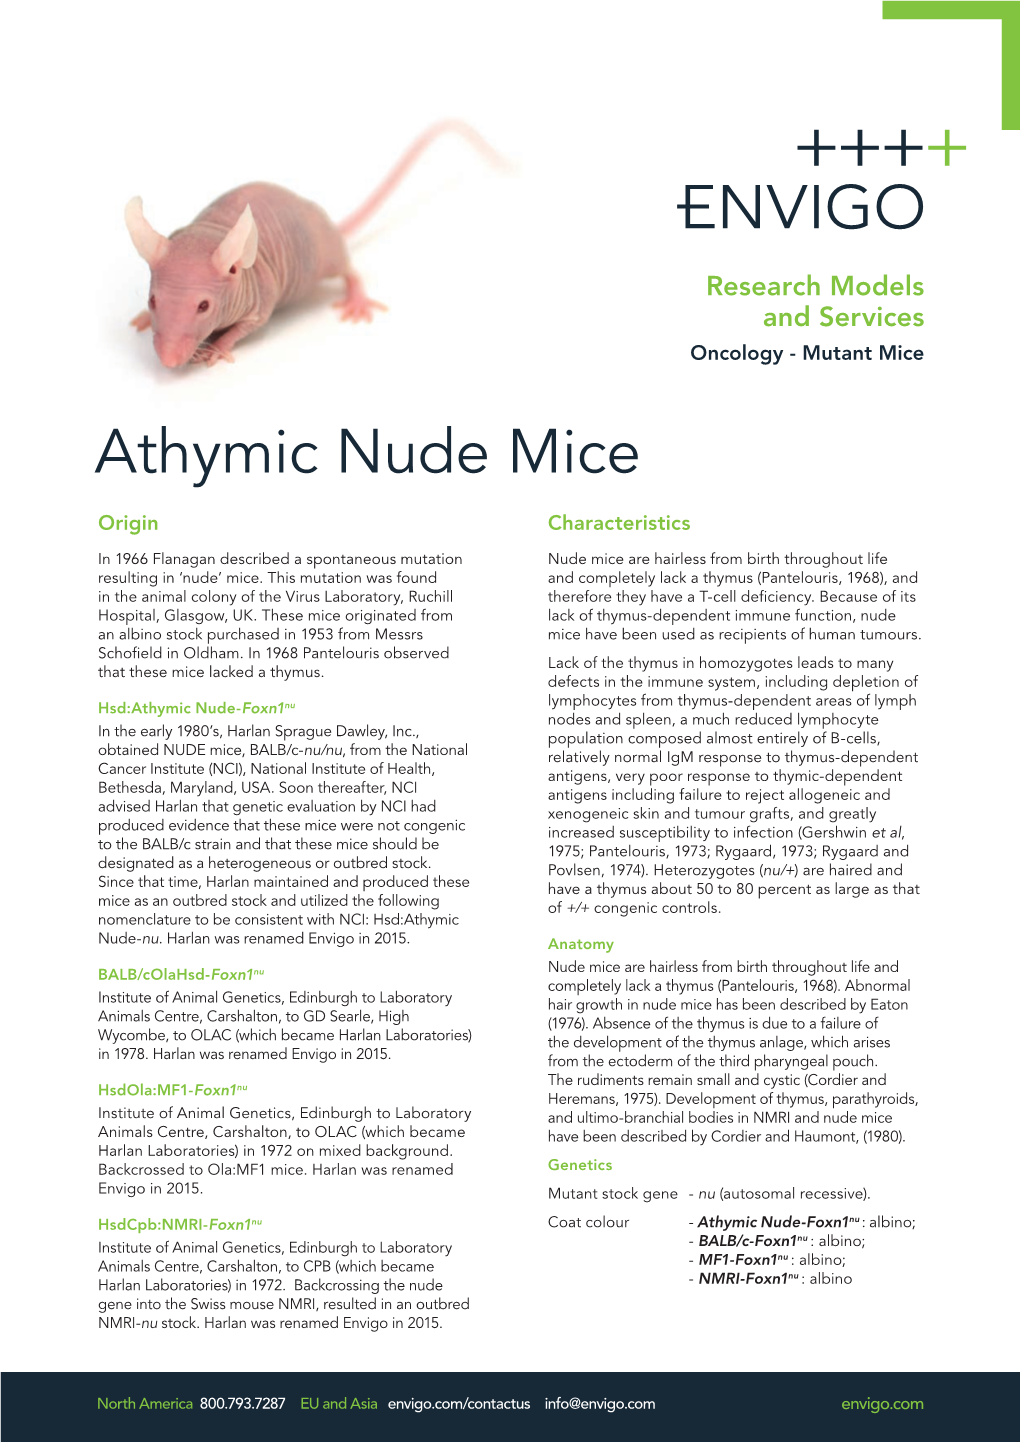 Athymic Nude Mice